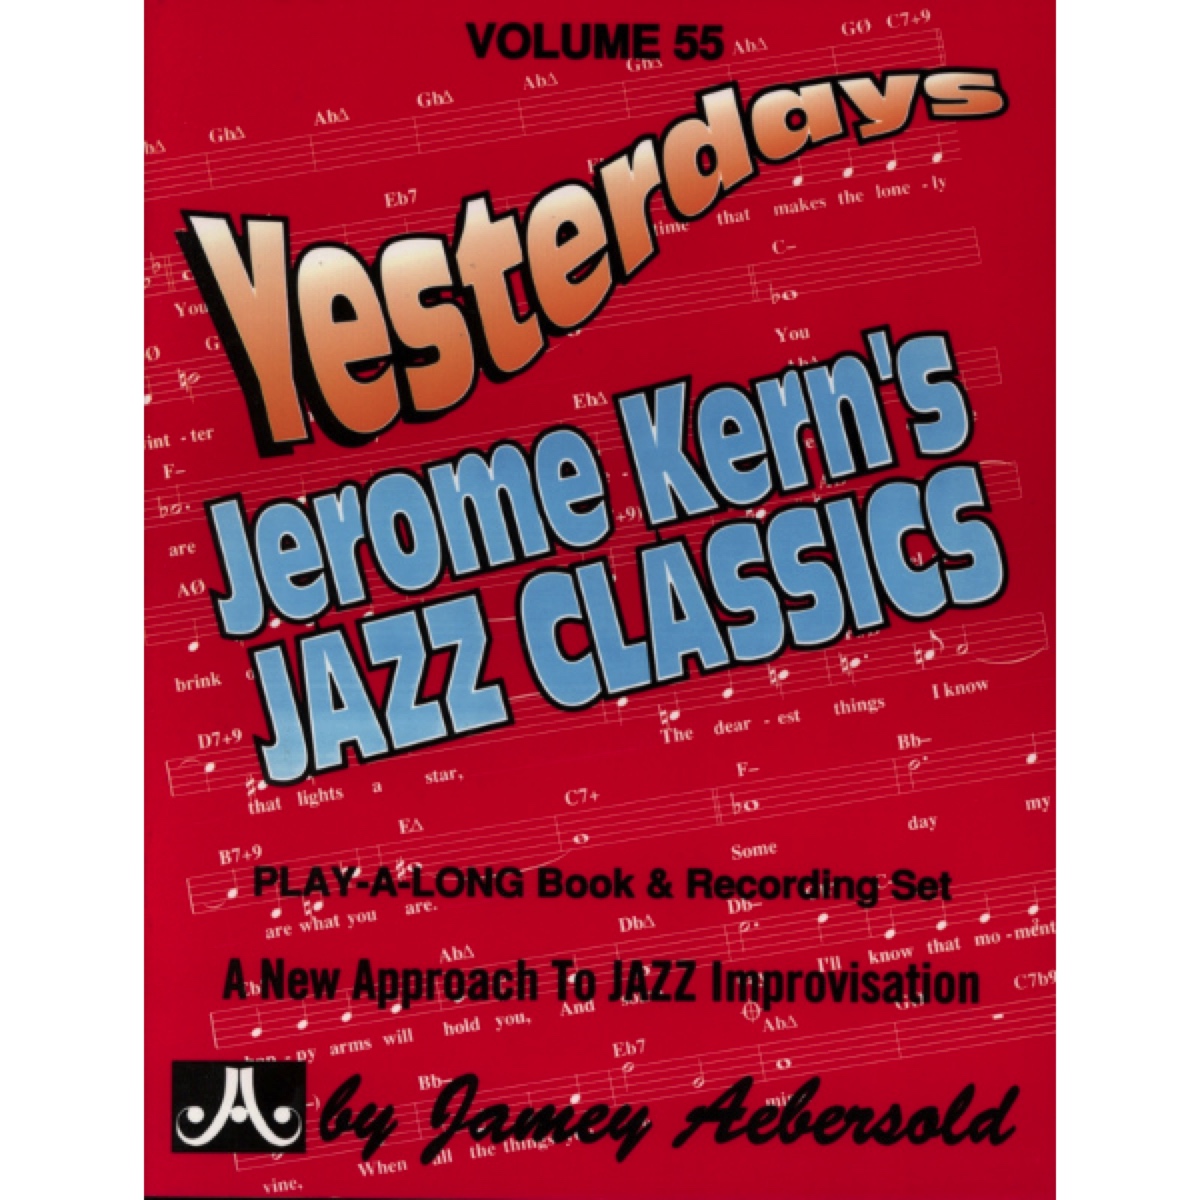 Aebersold vol. 55: Jerome Kern - Yesterdays